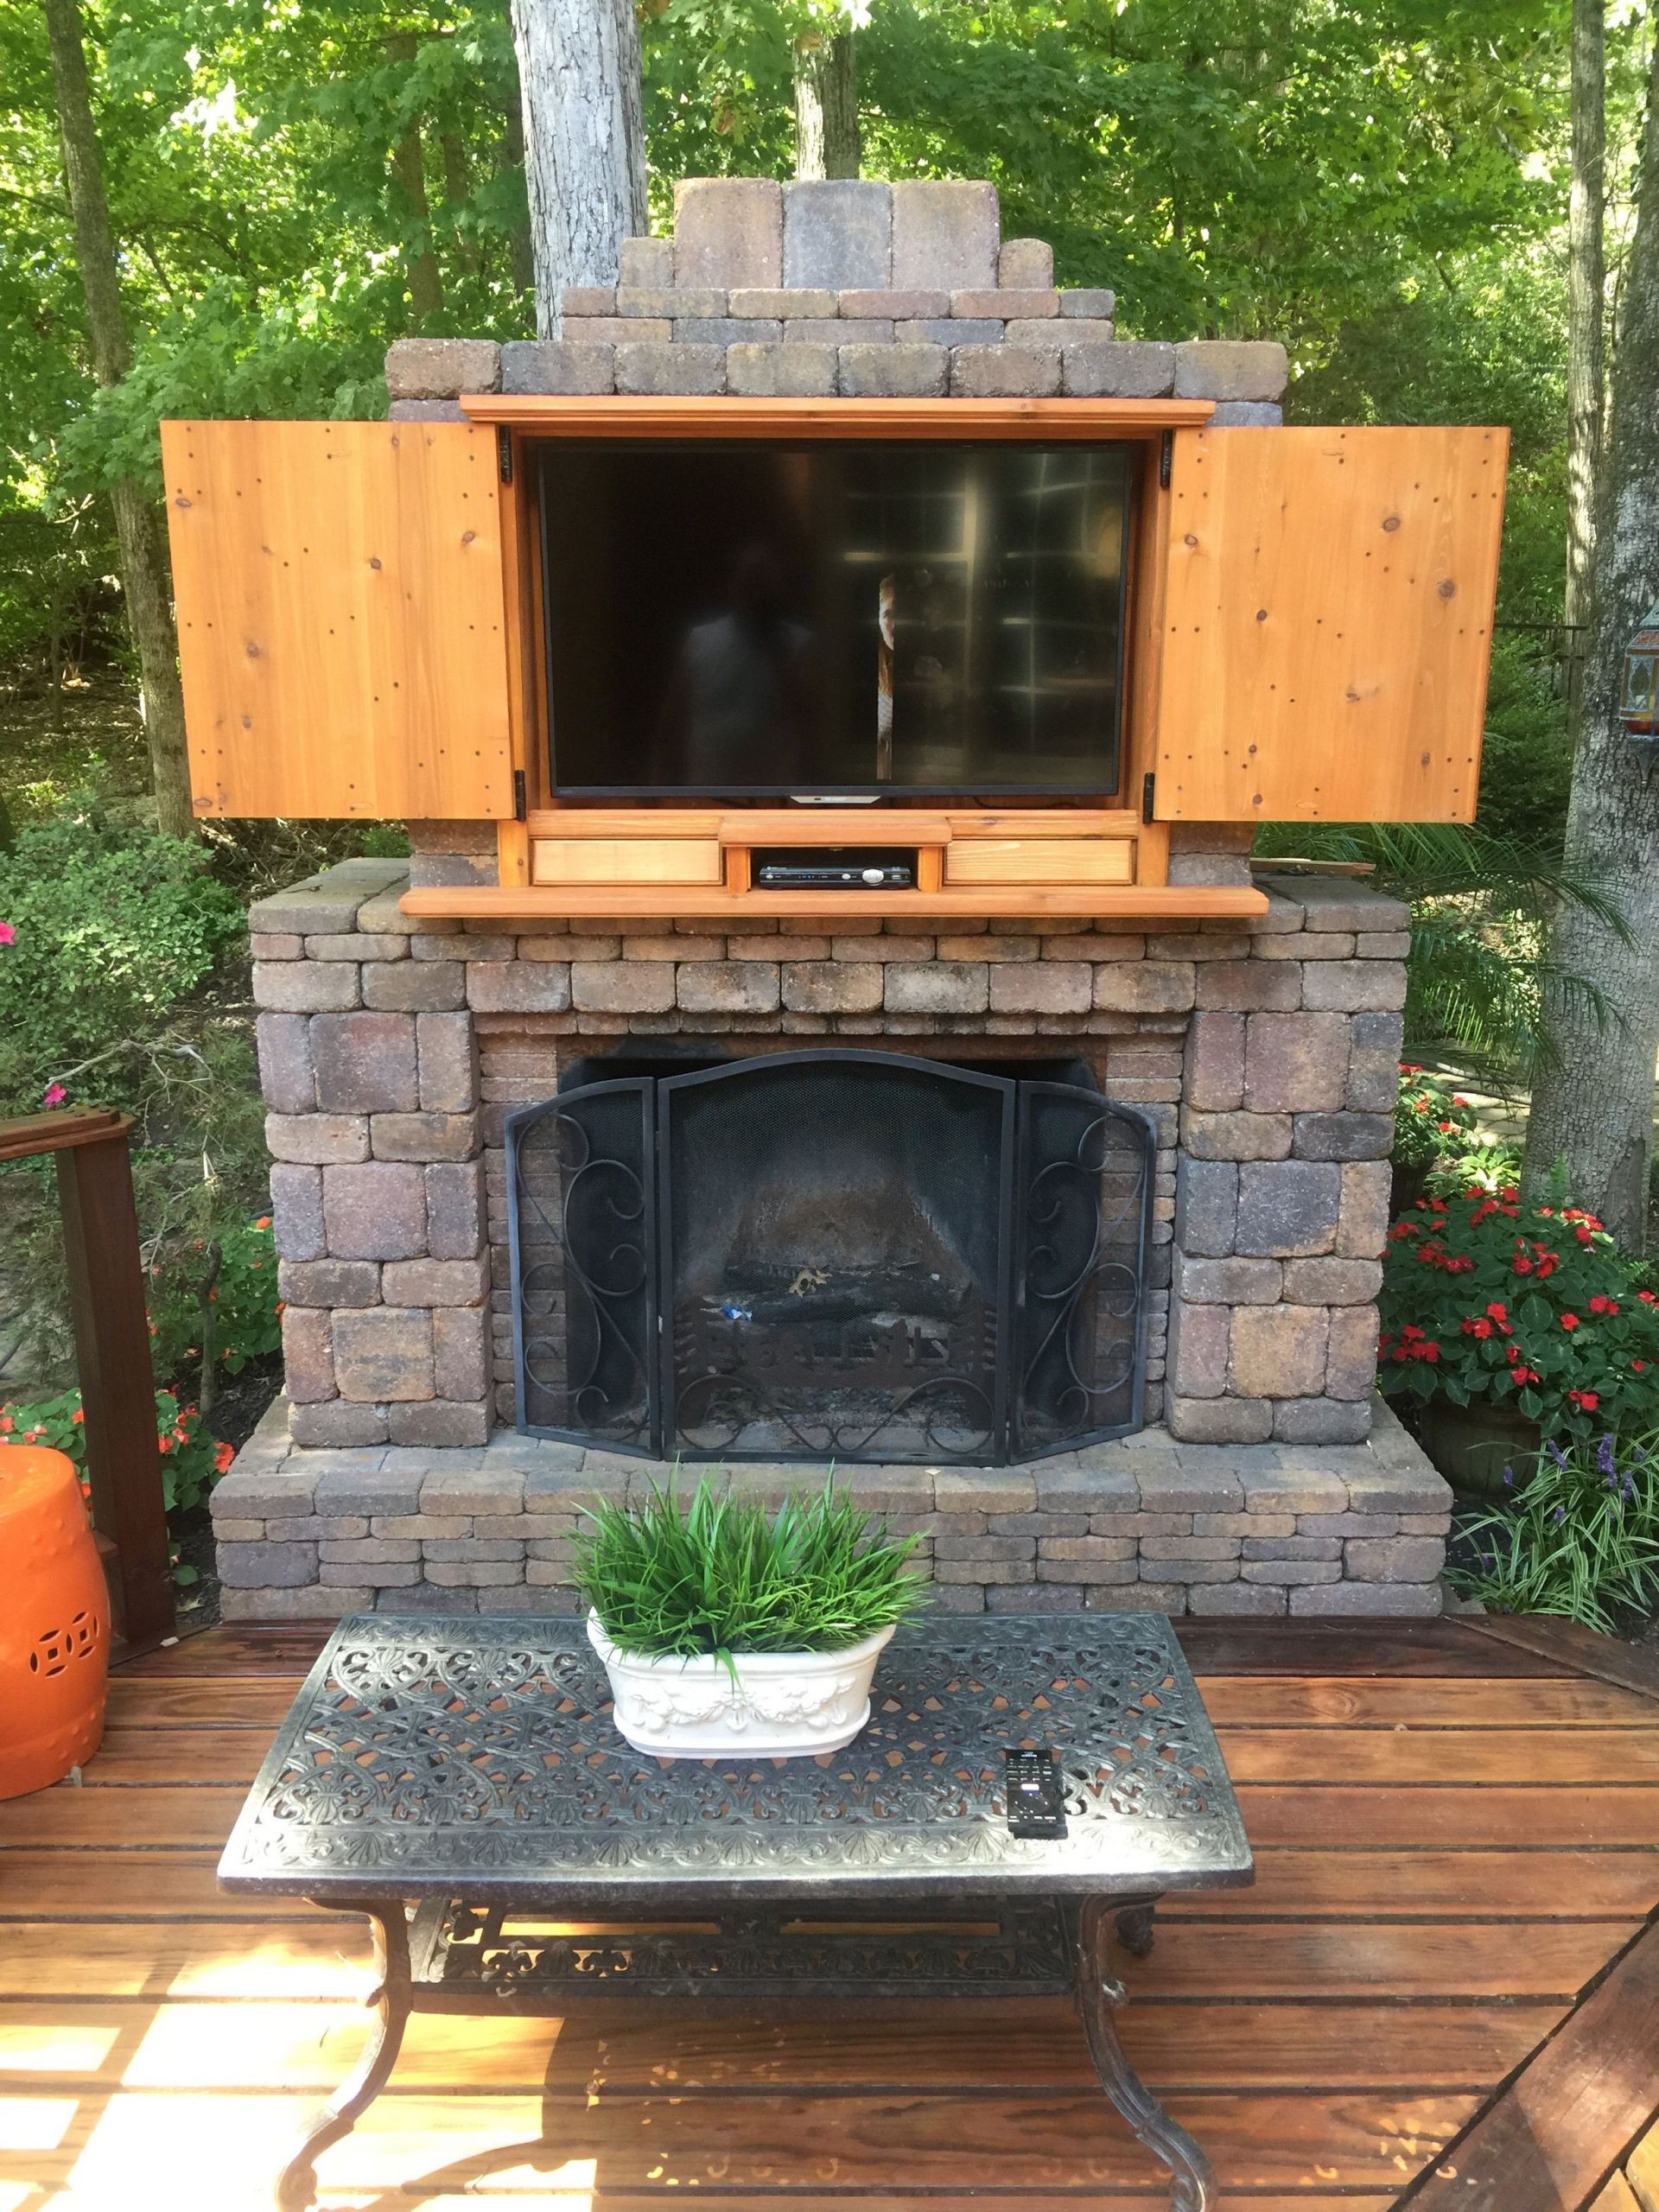 Outdoor Kitchen Kits Home Depot
 Home Depot Fireplace Kit upgrade